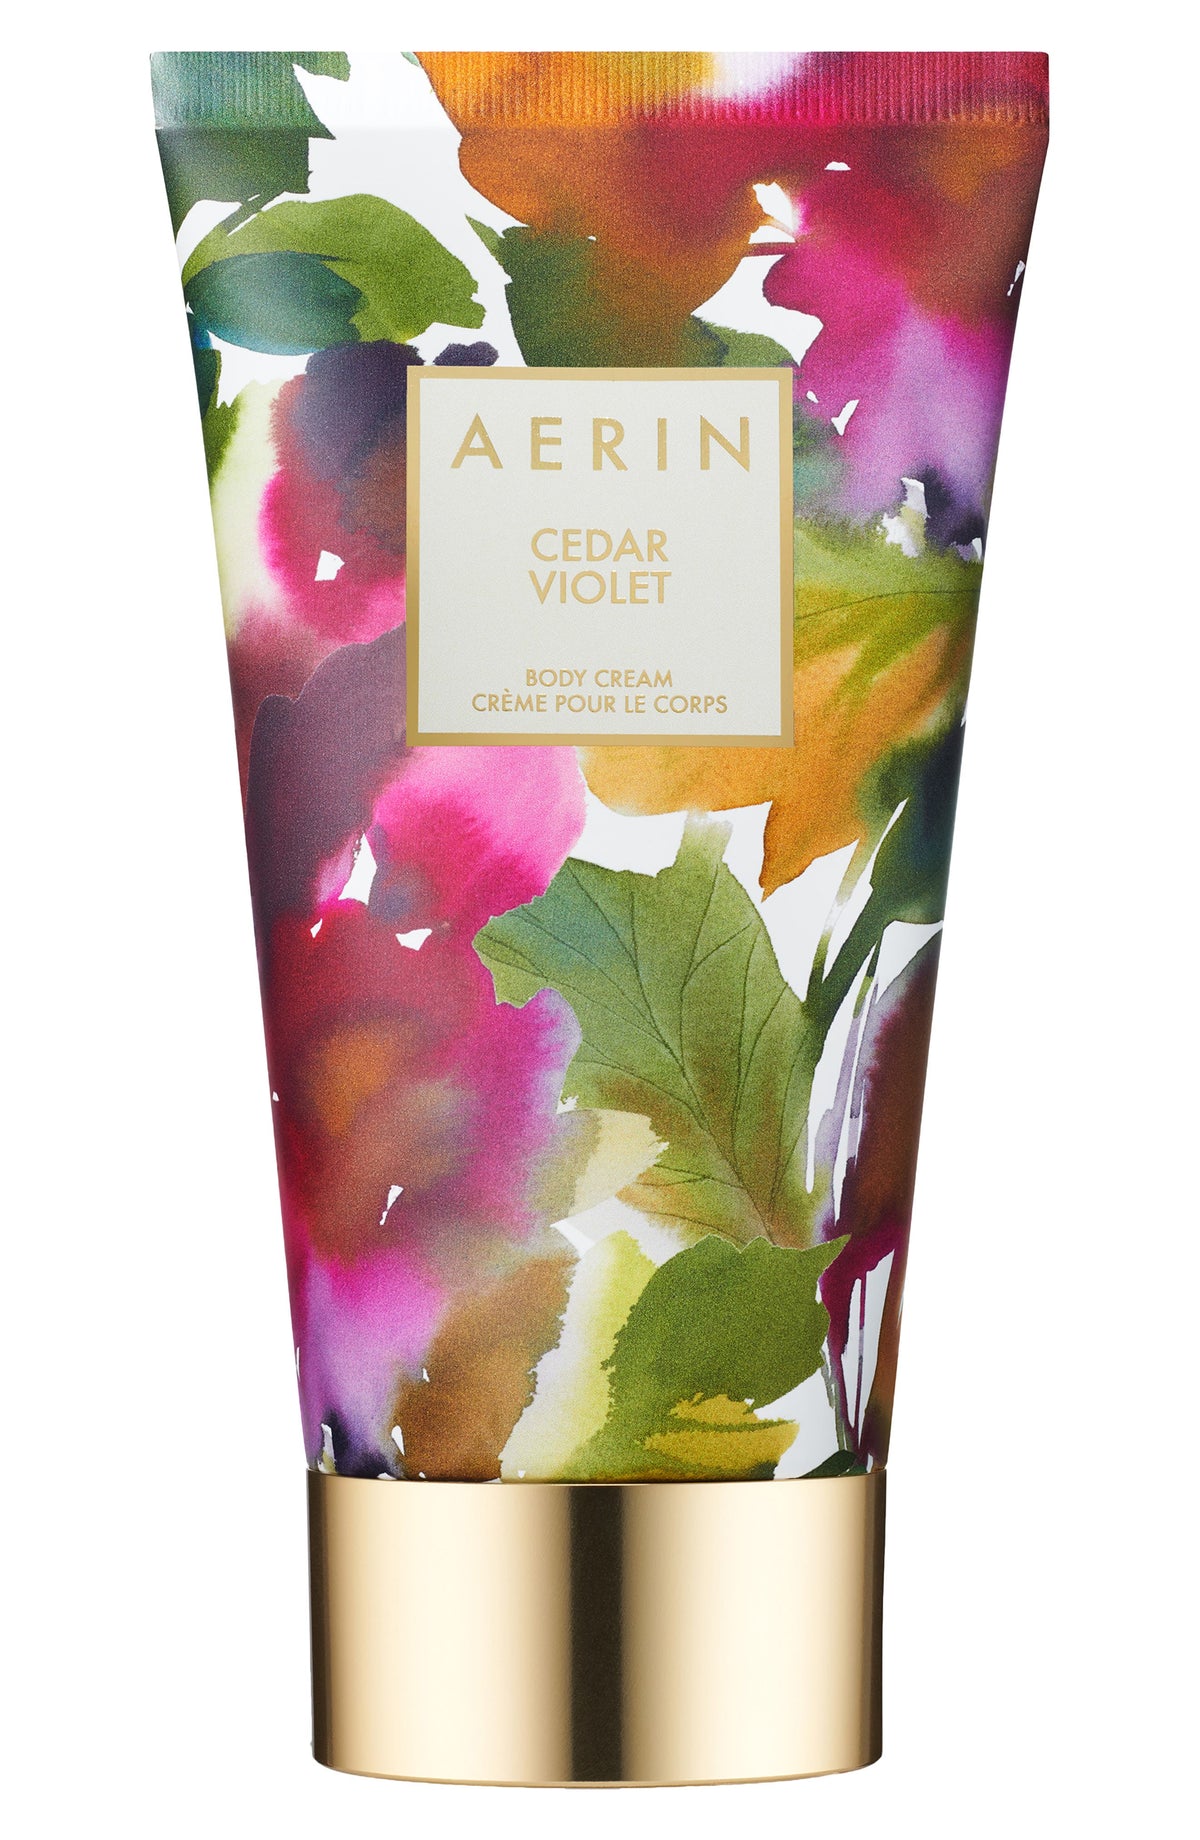 AERIN Cedar Violet Body Cream